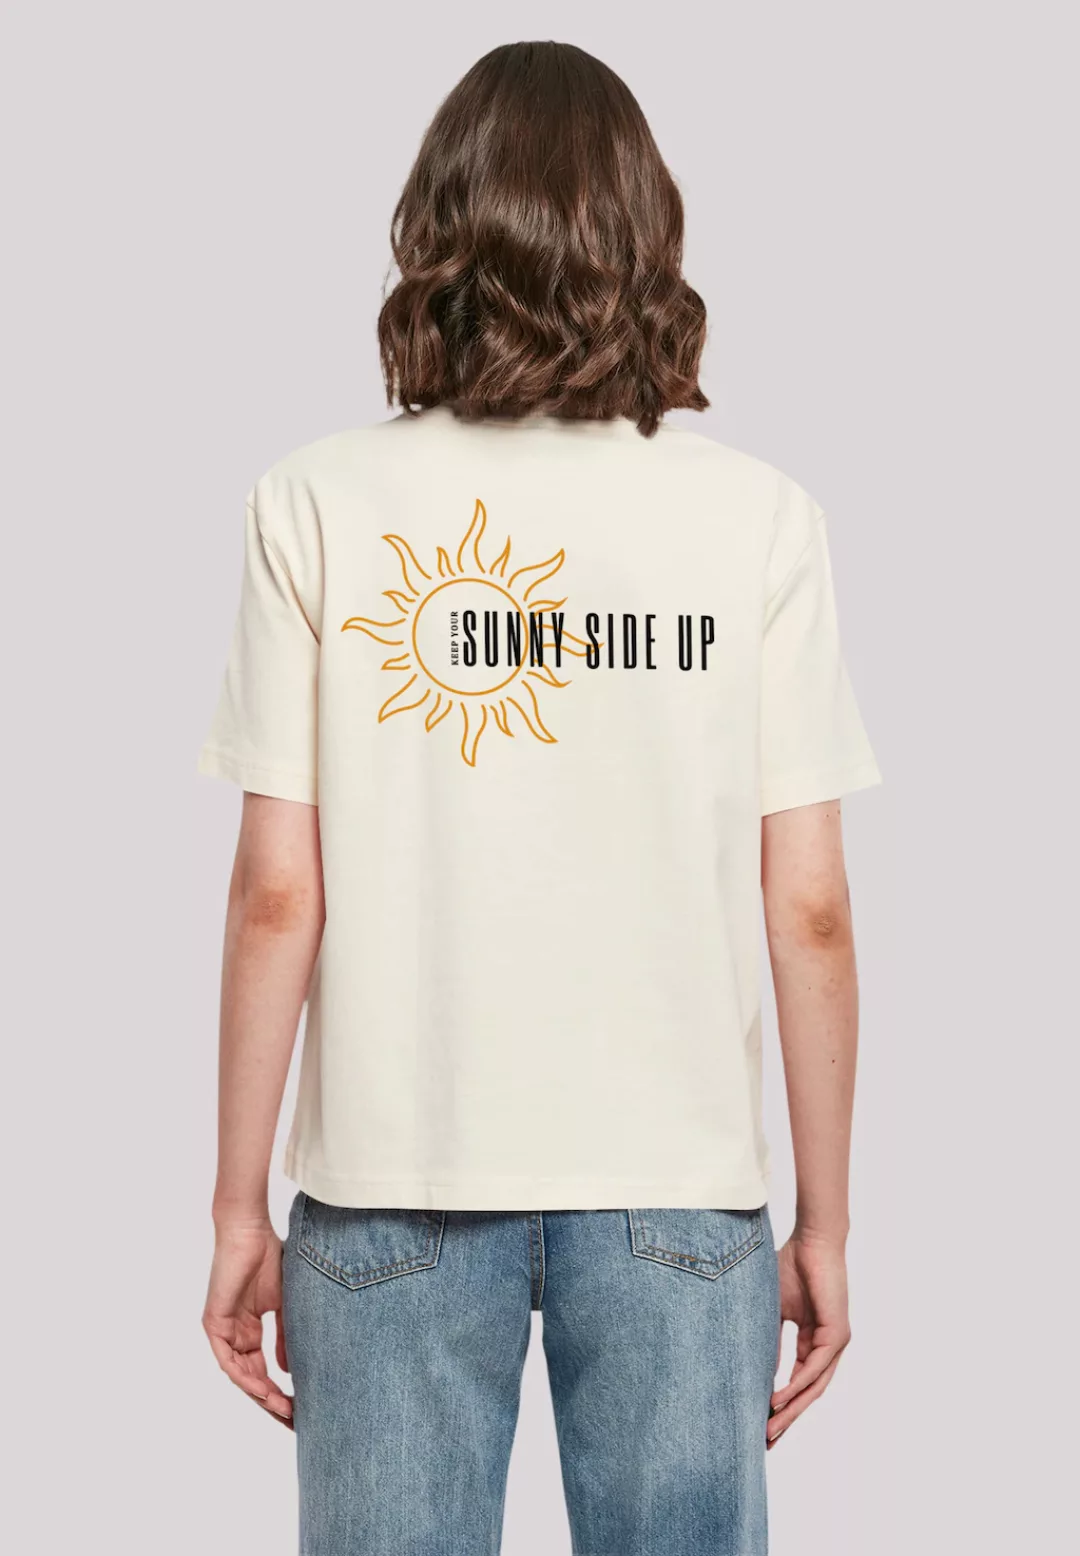 F4NT4STIC T-Shirt "Sunny side up", Print günstig online kaufen